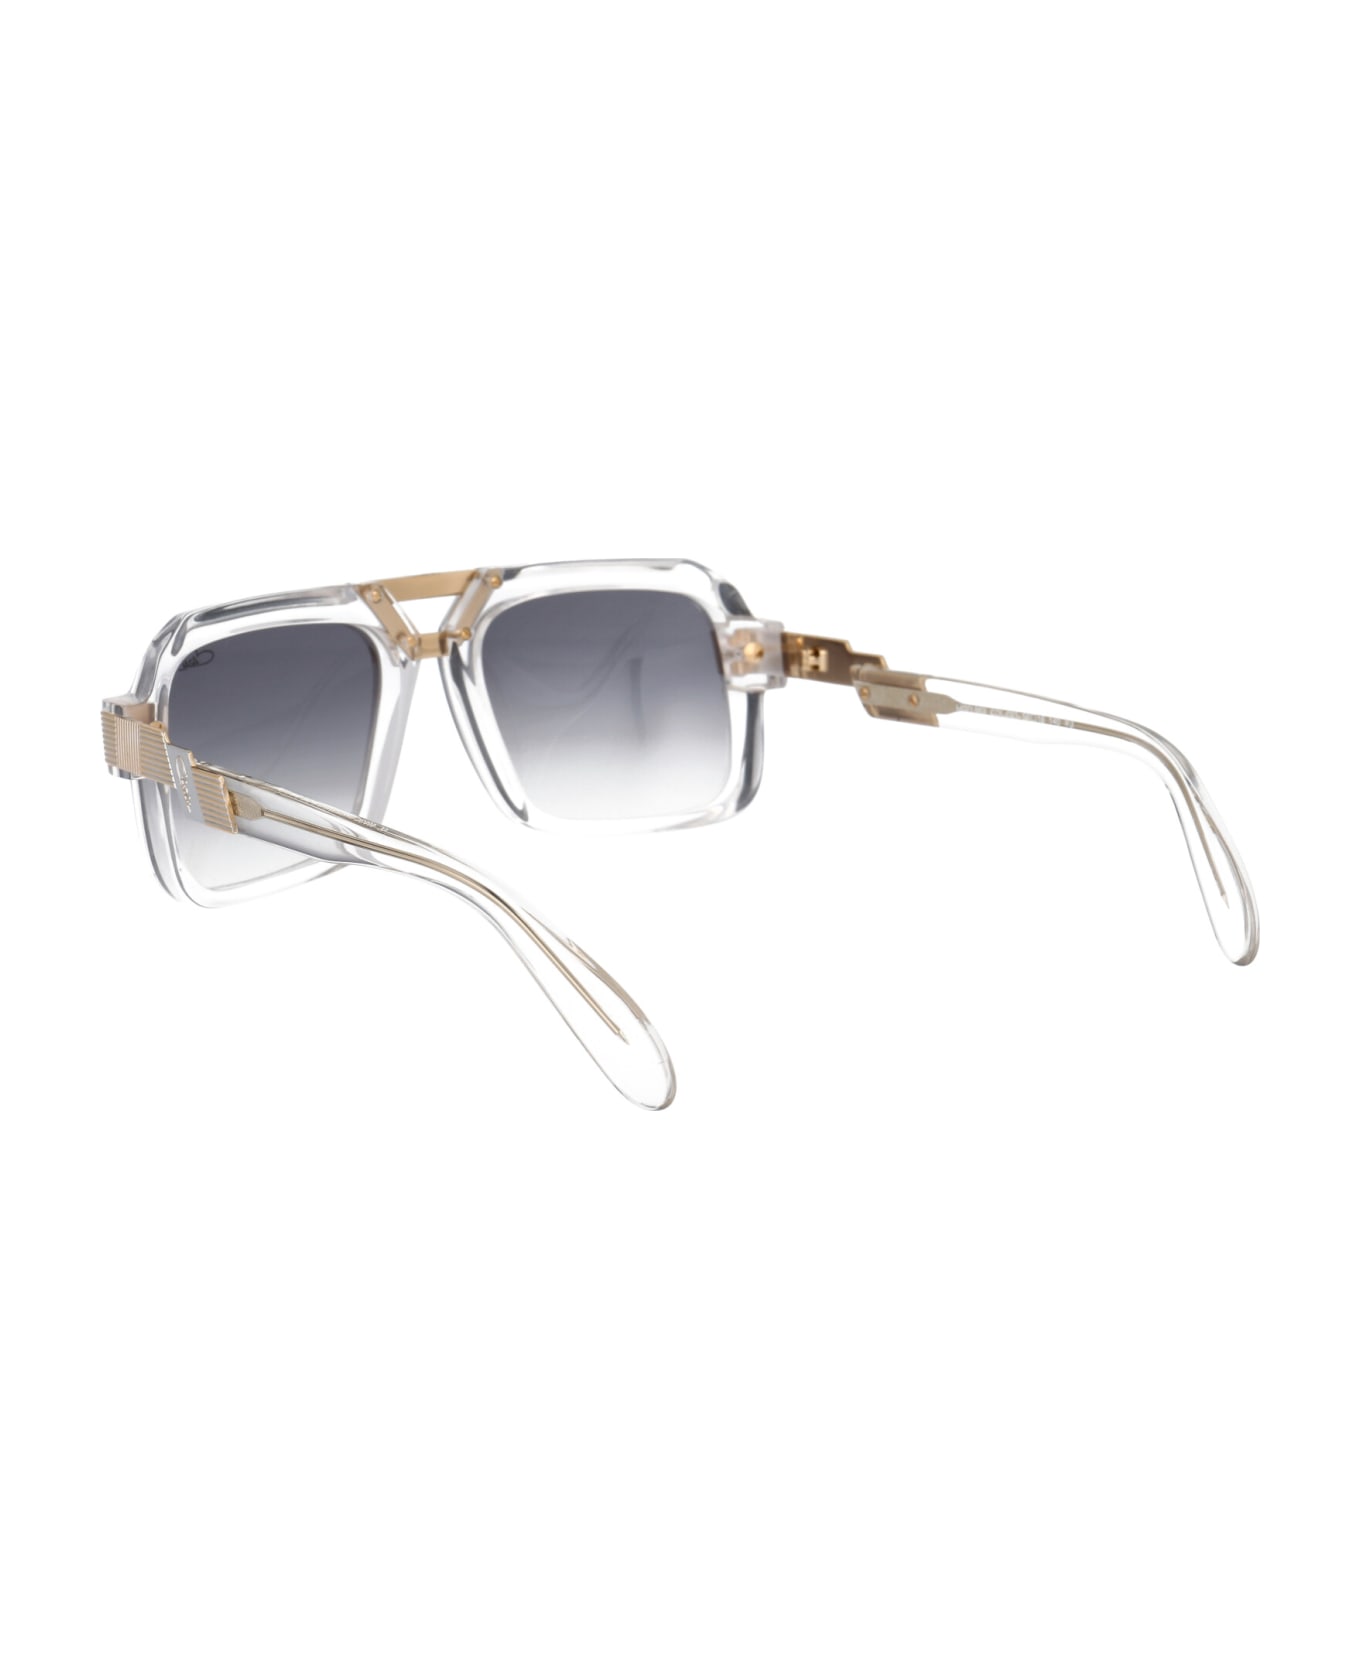 Cazal Mod. 669 Sunglasses - 003 CRYSTAL サングラス